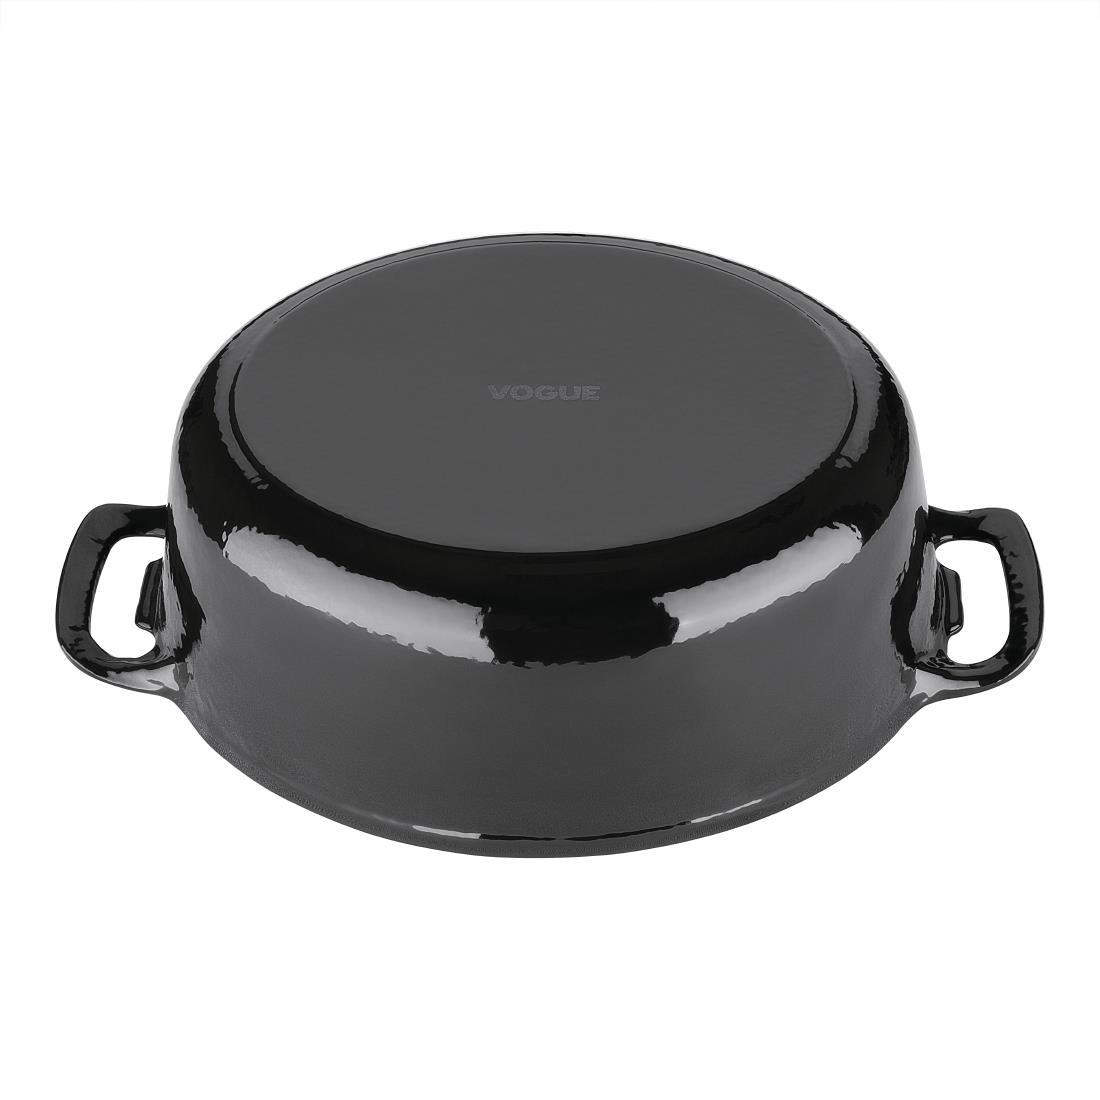 Vogue Black Oval Casserole Dish 6Ltr - GH310  - 4